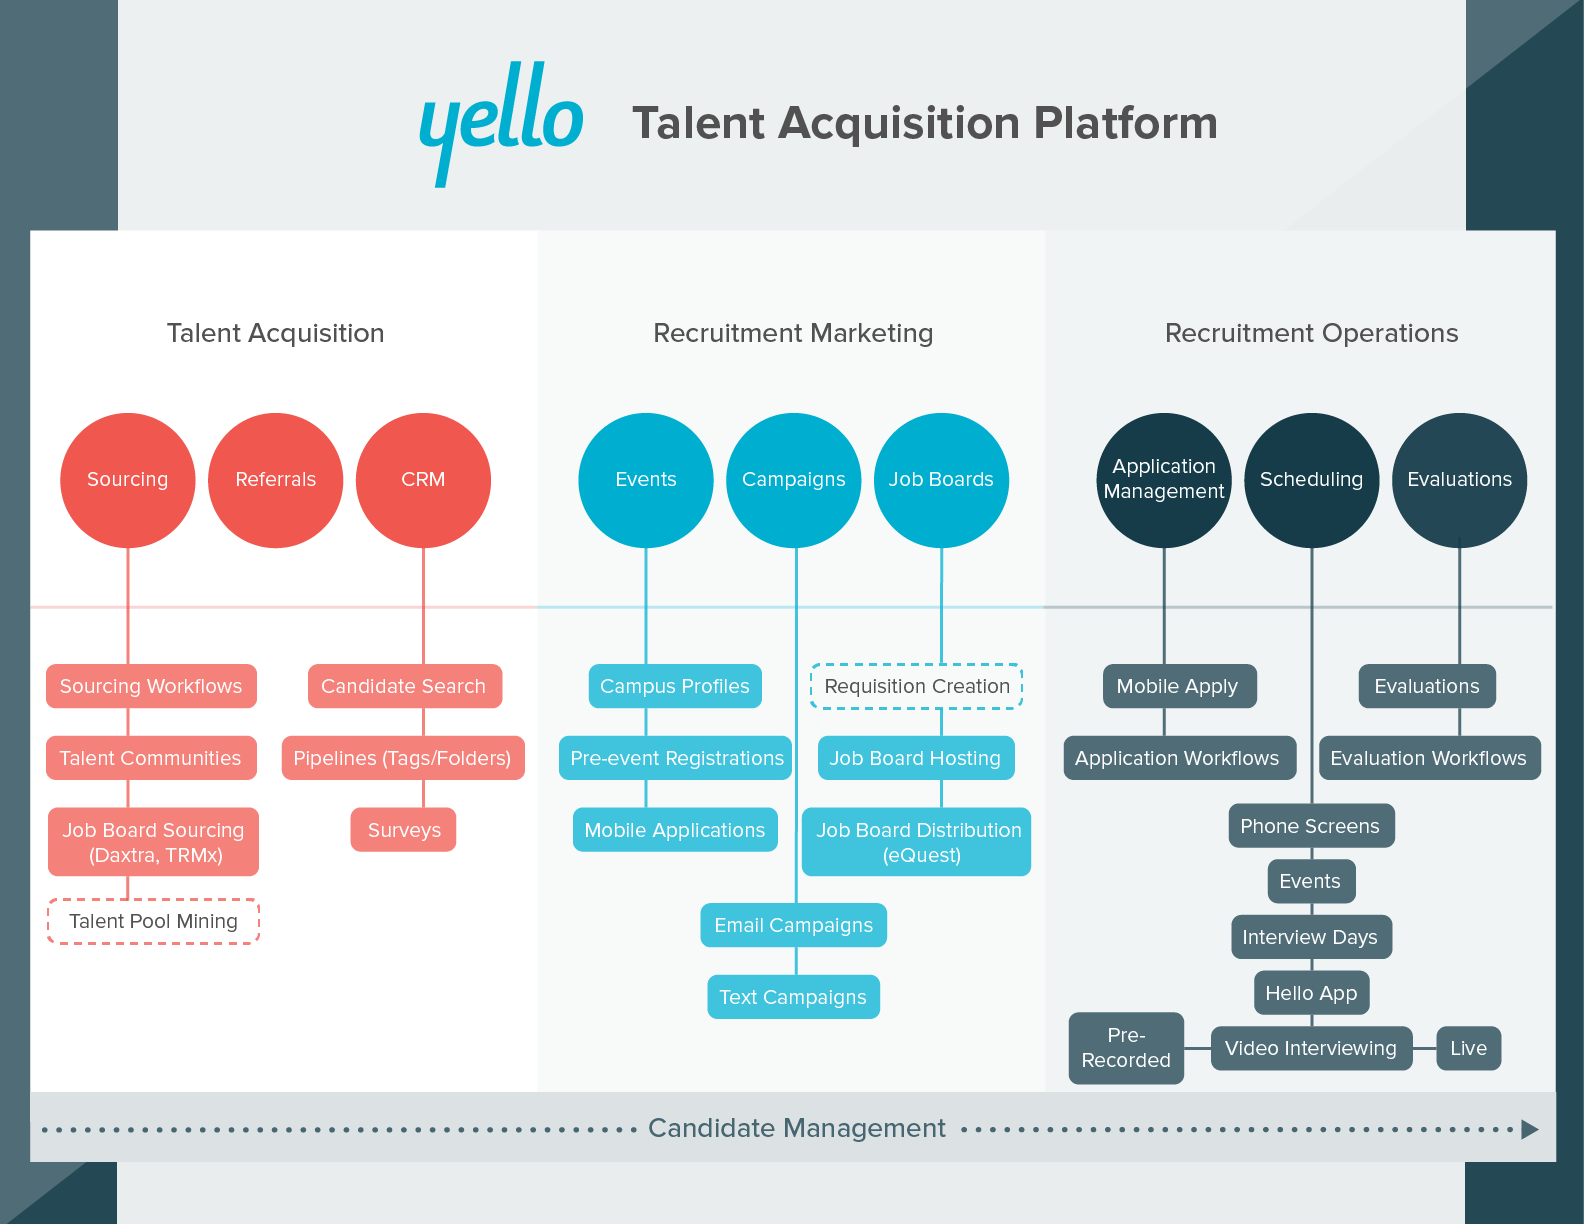 Yello's Talent Acquisition Platform